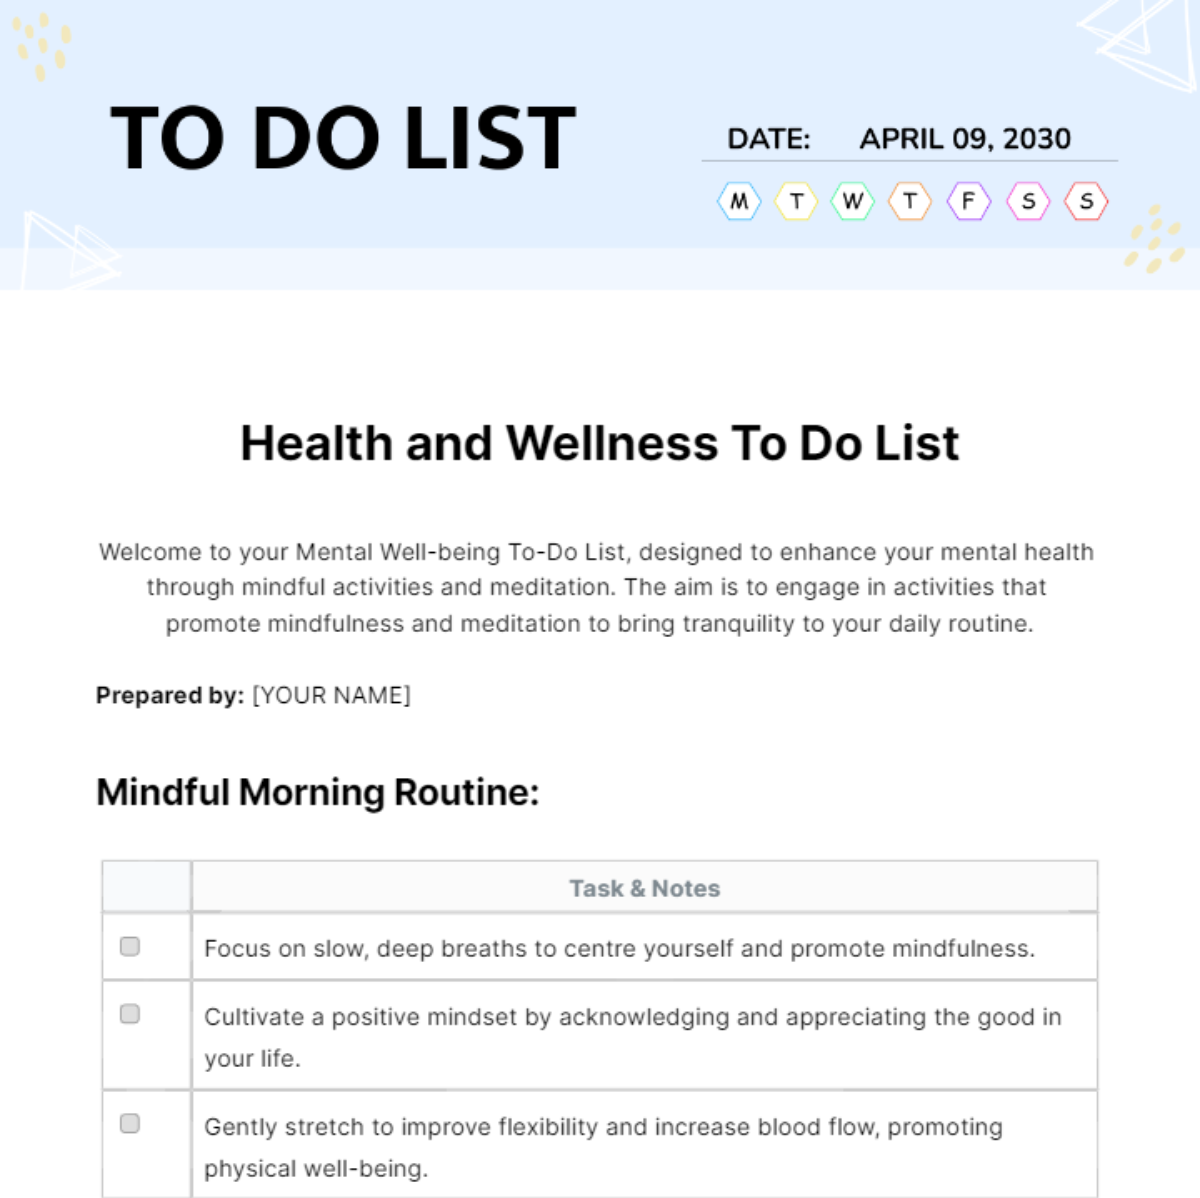 Health and Wellness To Do List Template